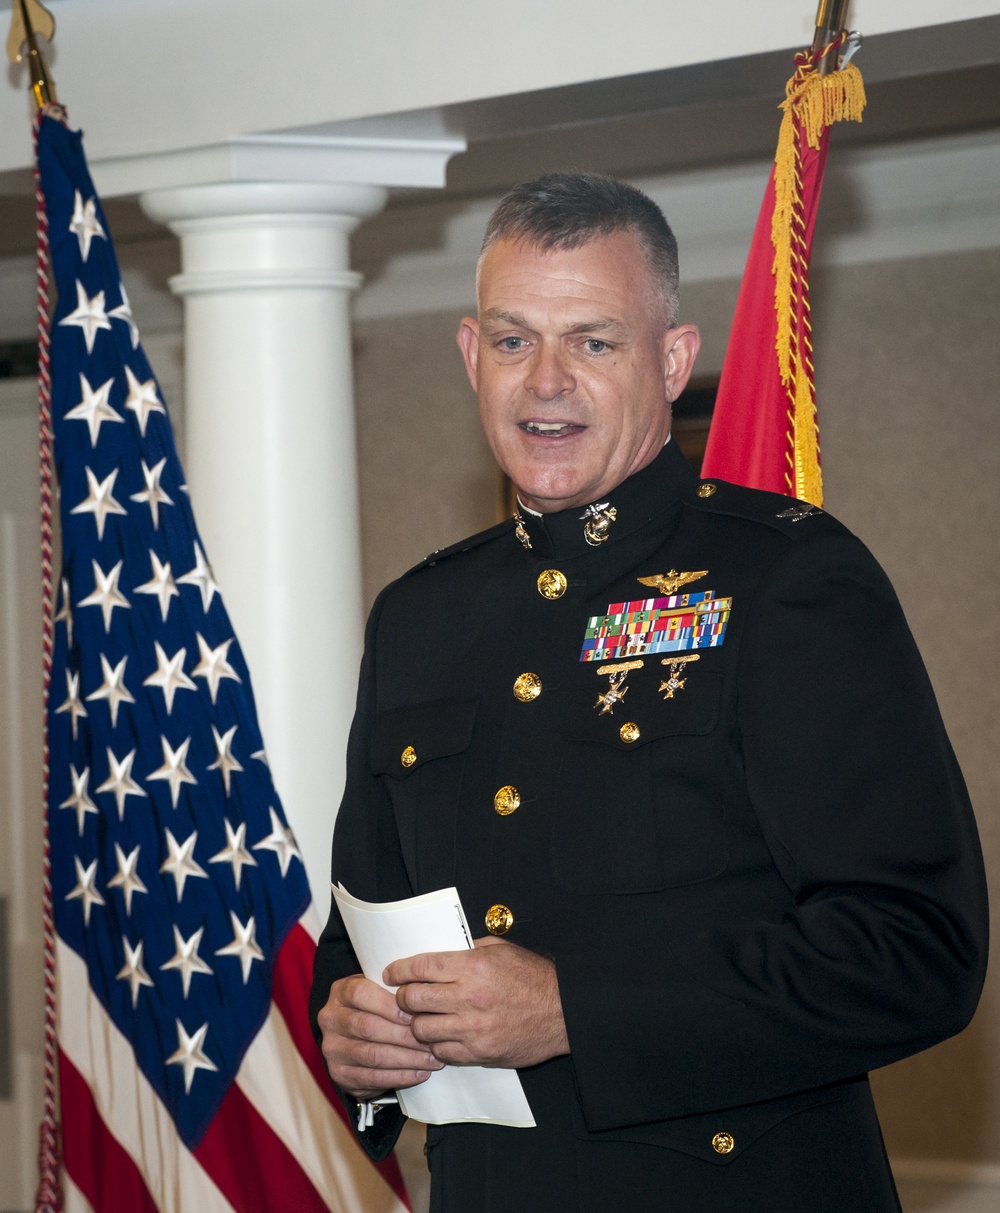 Lt. Col. Sidney McGraw Retirement Ceremony